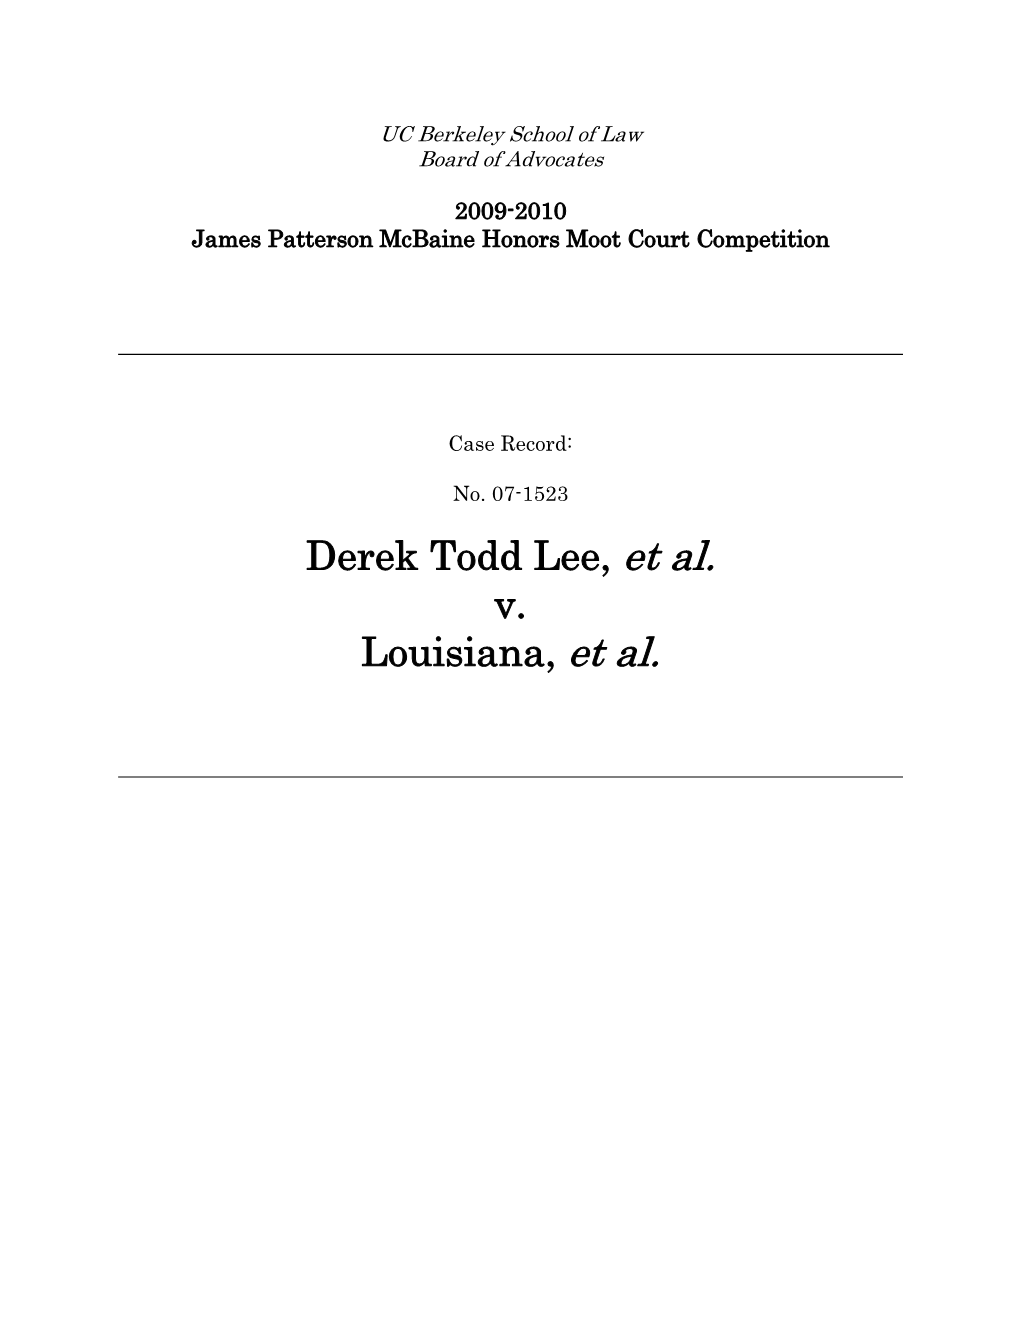 Derek Todd Lee, Et Al. V. Louisiana, Et Al